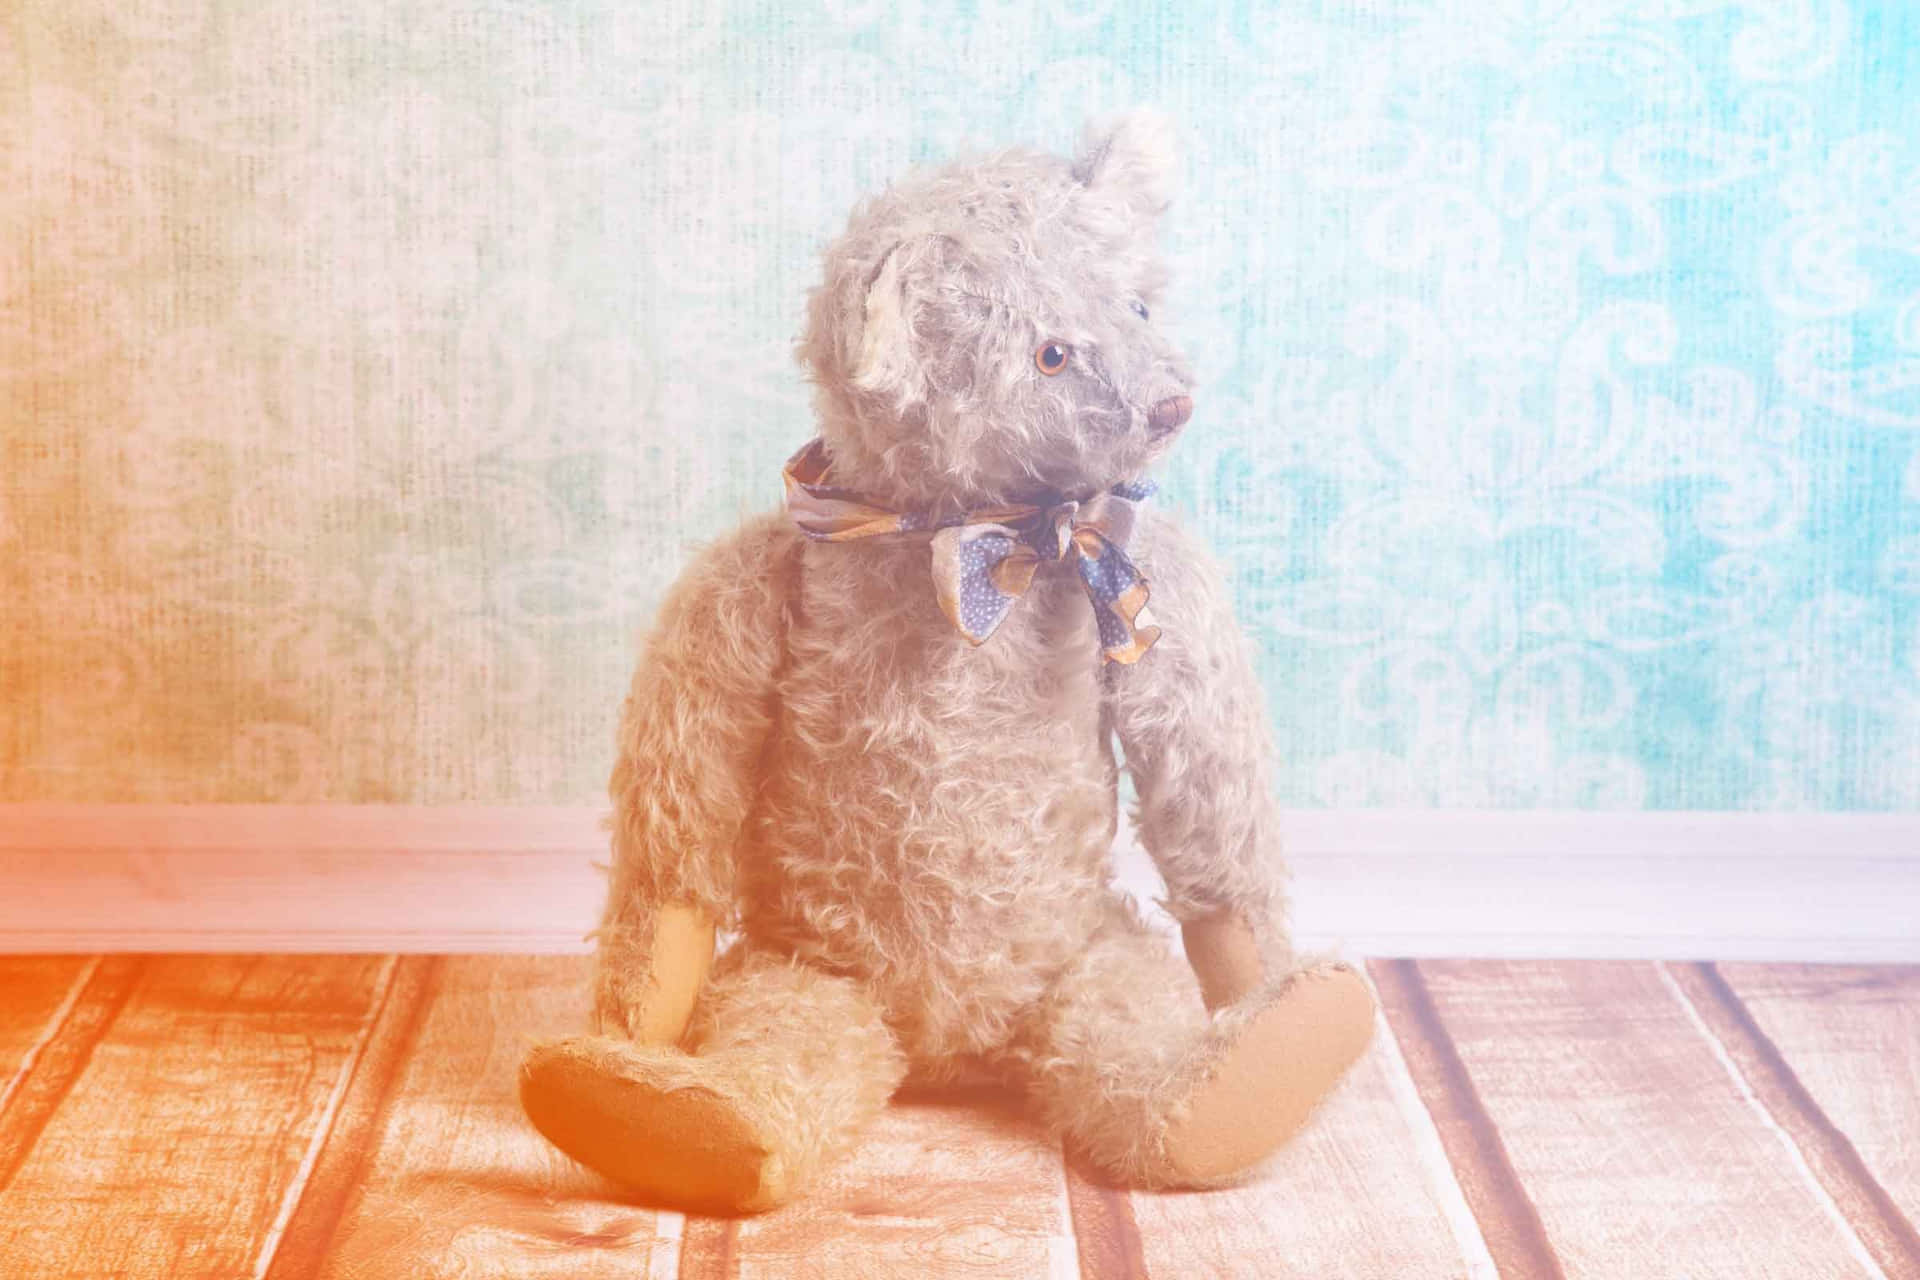 A Teddy Bear Sitting On A Wooden Floor